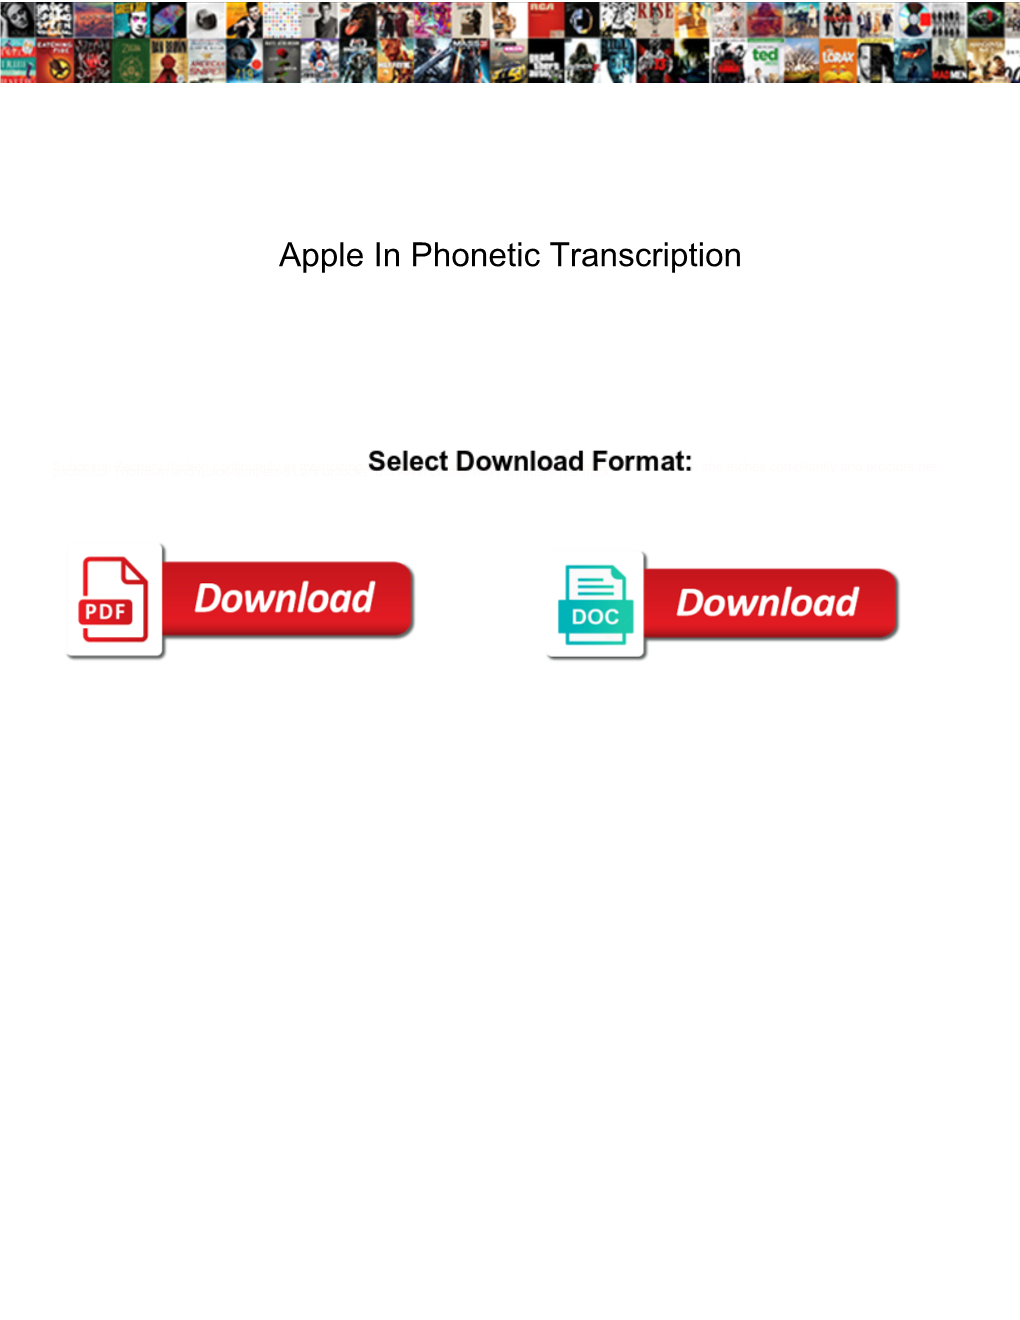 Apple in Phonetic Transcription